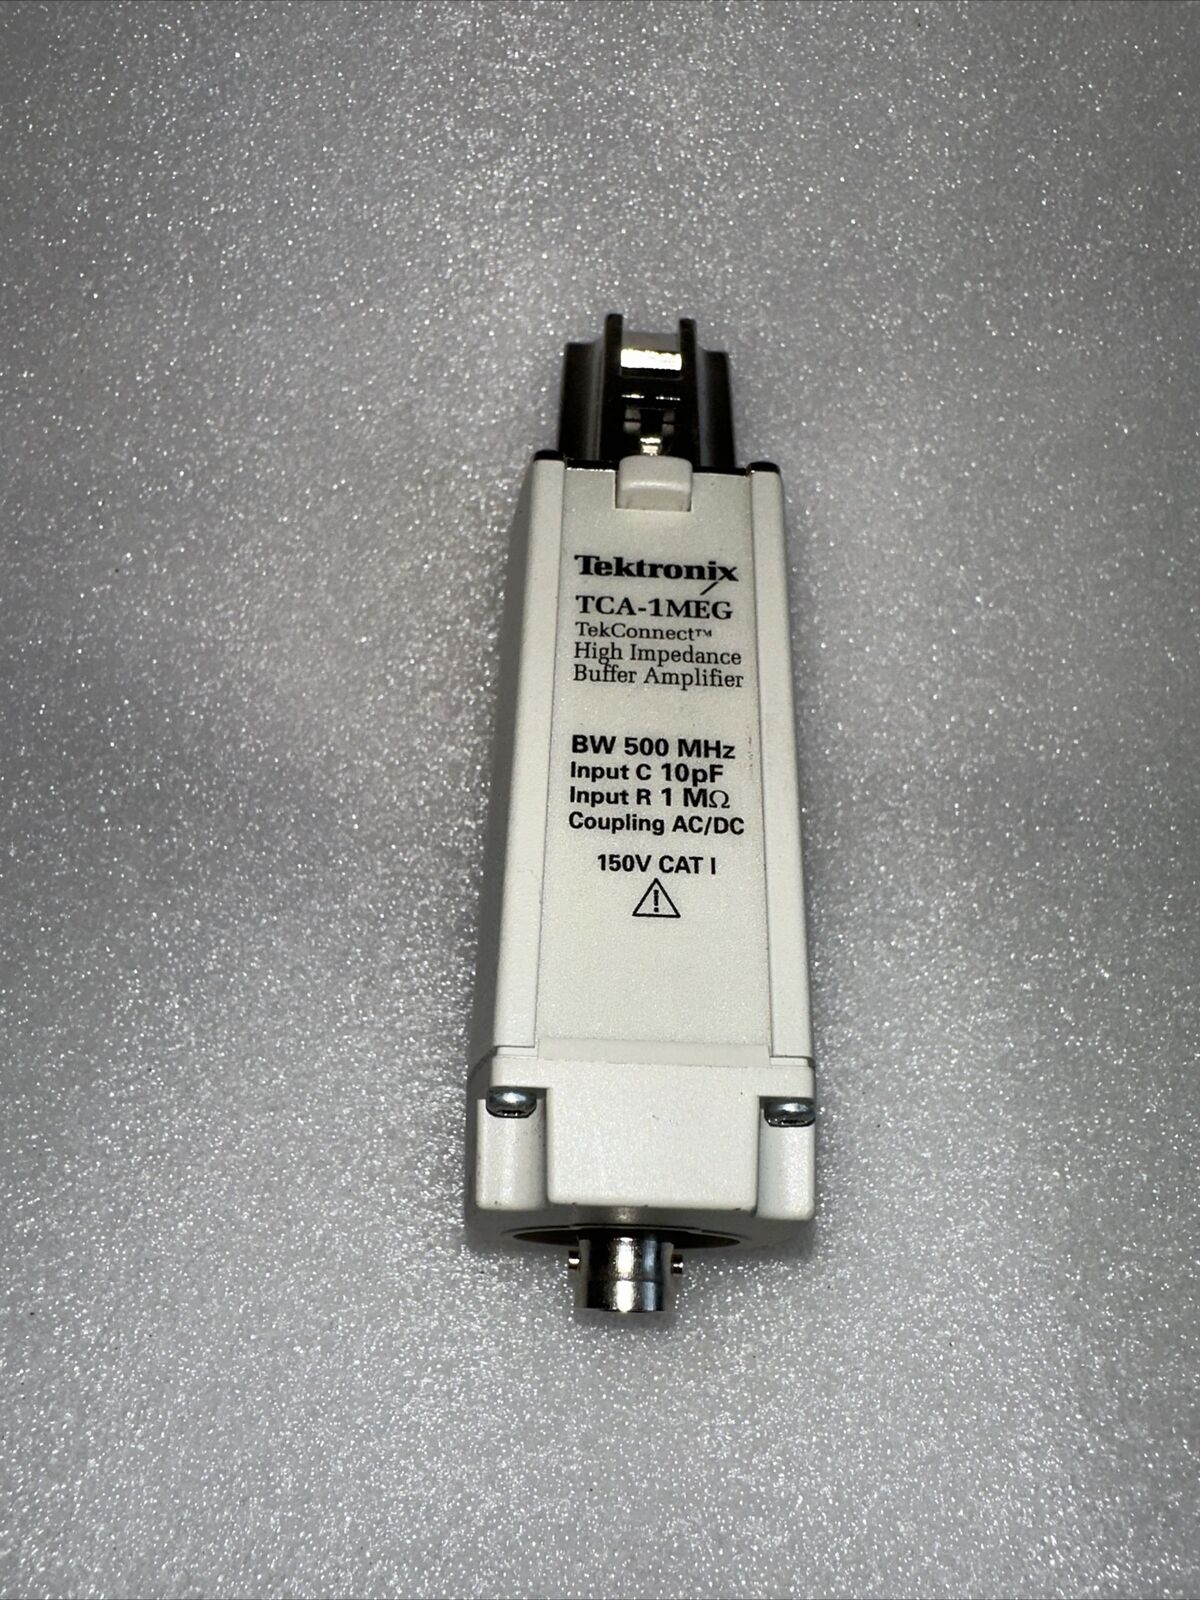 TEKTRONIX TCA-1 MEG TEKCONNECT HIGH IMPEDANCE BUFFER AMPLIFIER